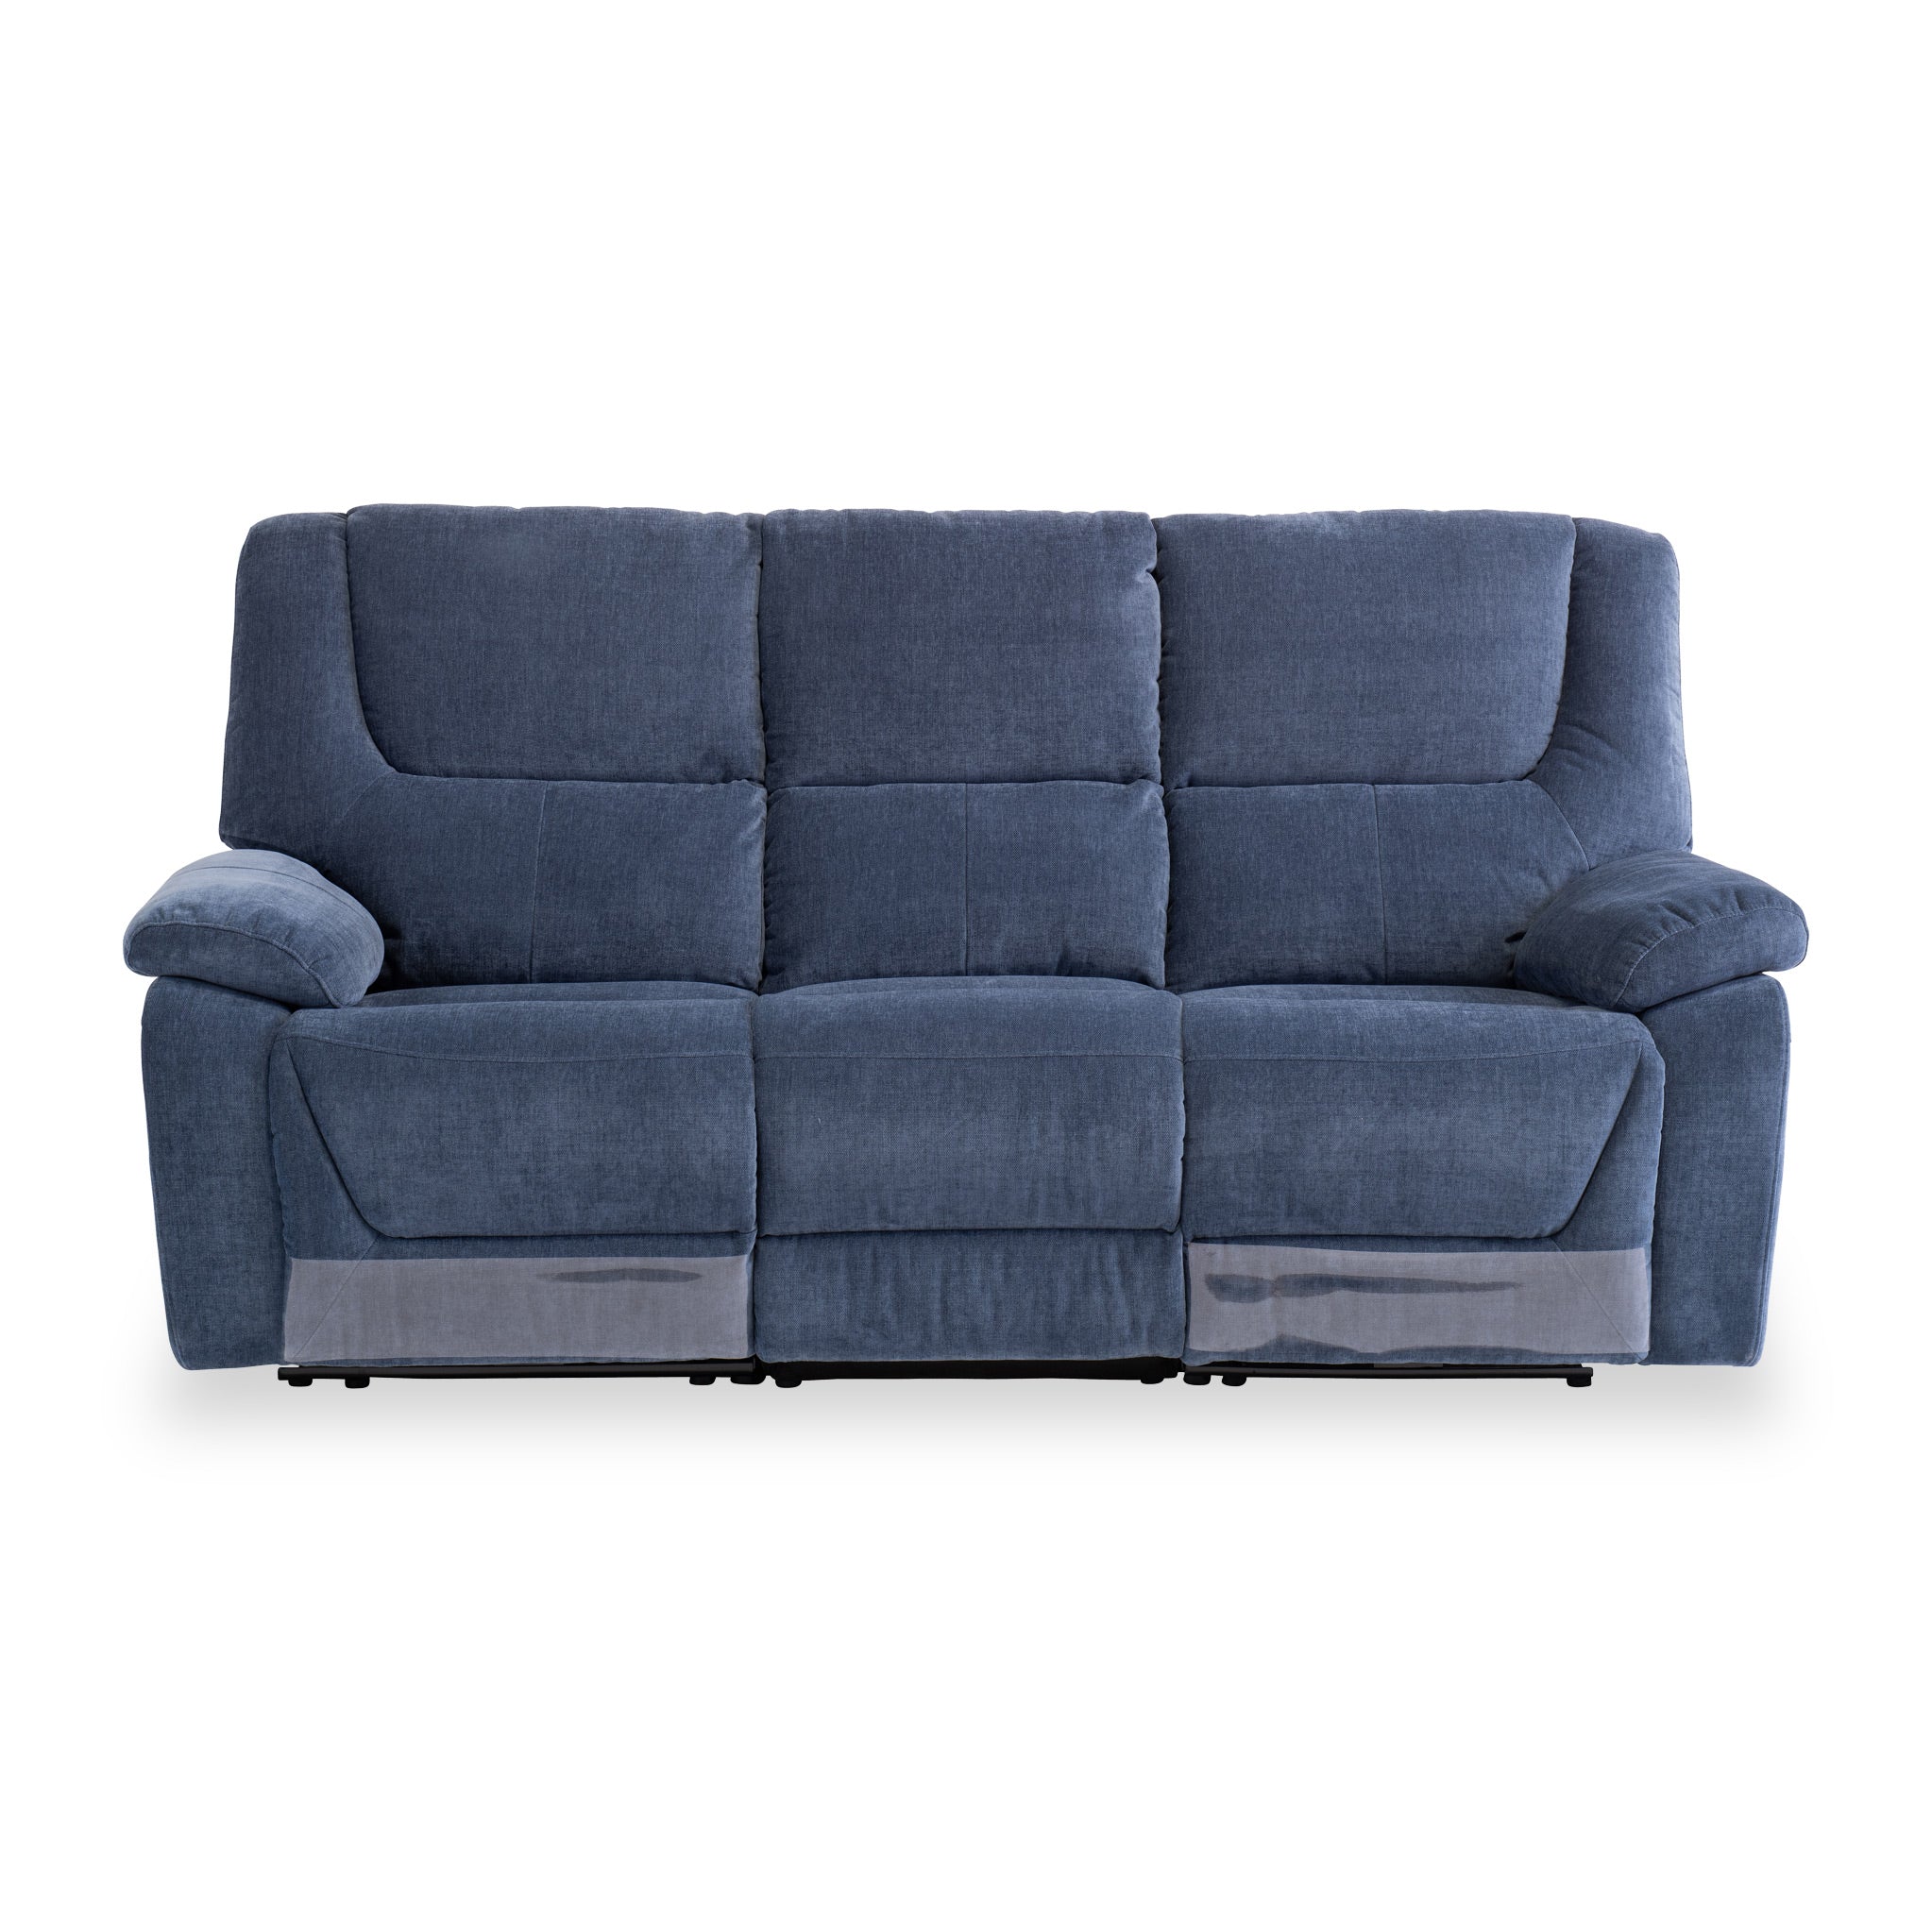 Barlow Fabric Electric Reclining 3 Seater Sofa Blue Grey Roseland